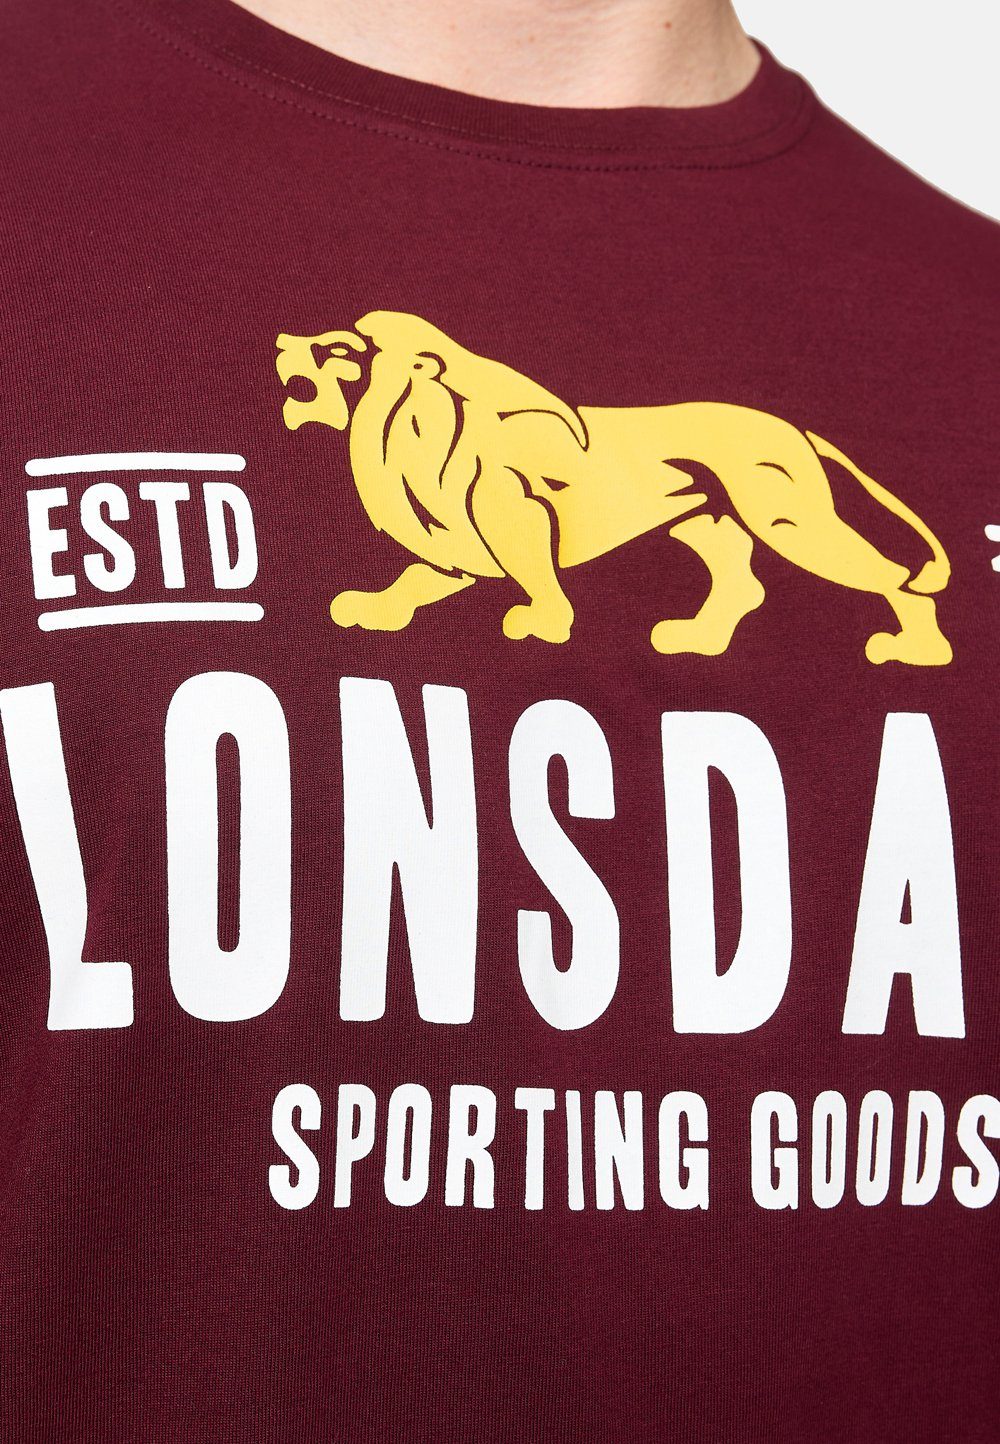 Lonsdale T-Shirt BLAGH